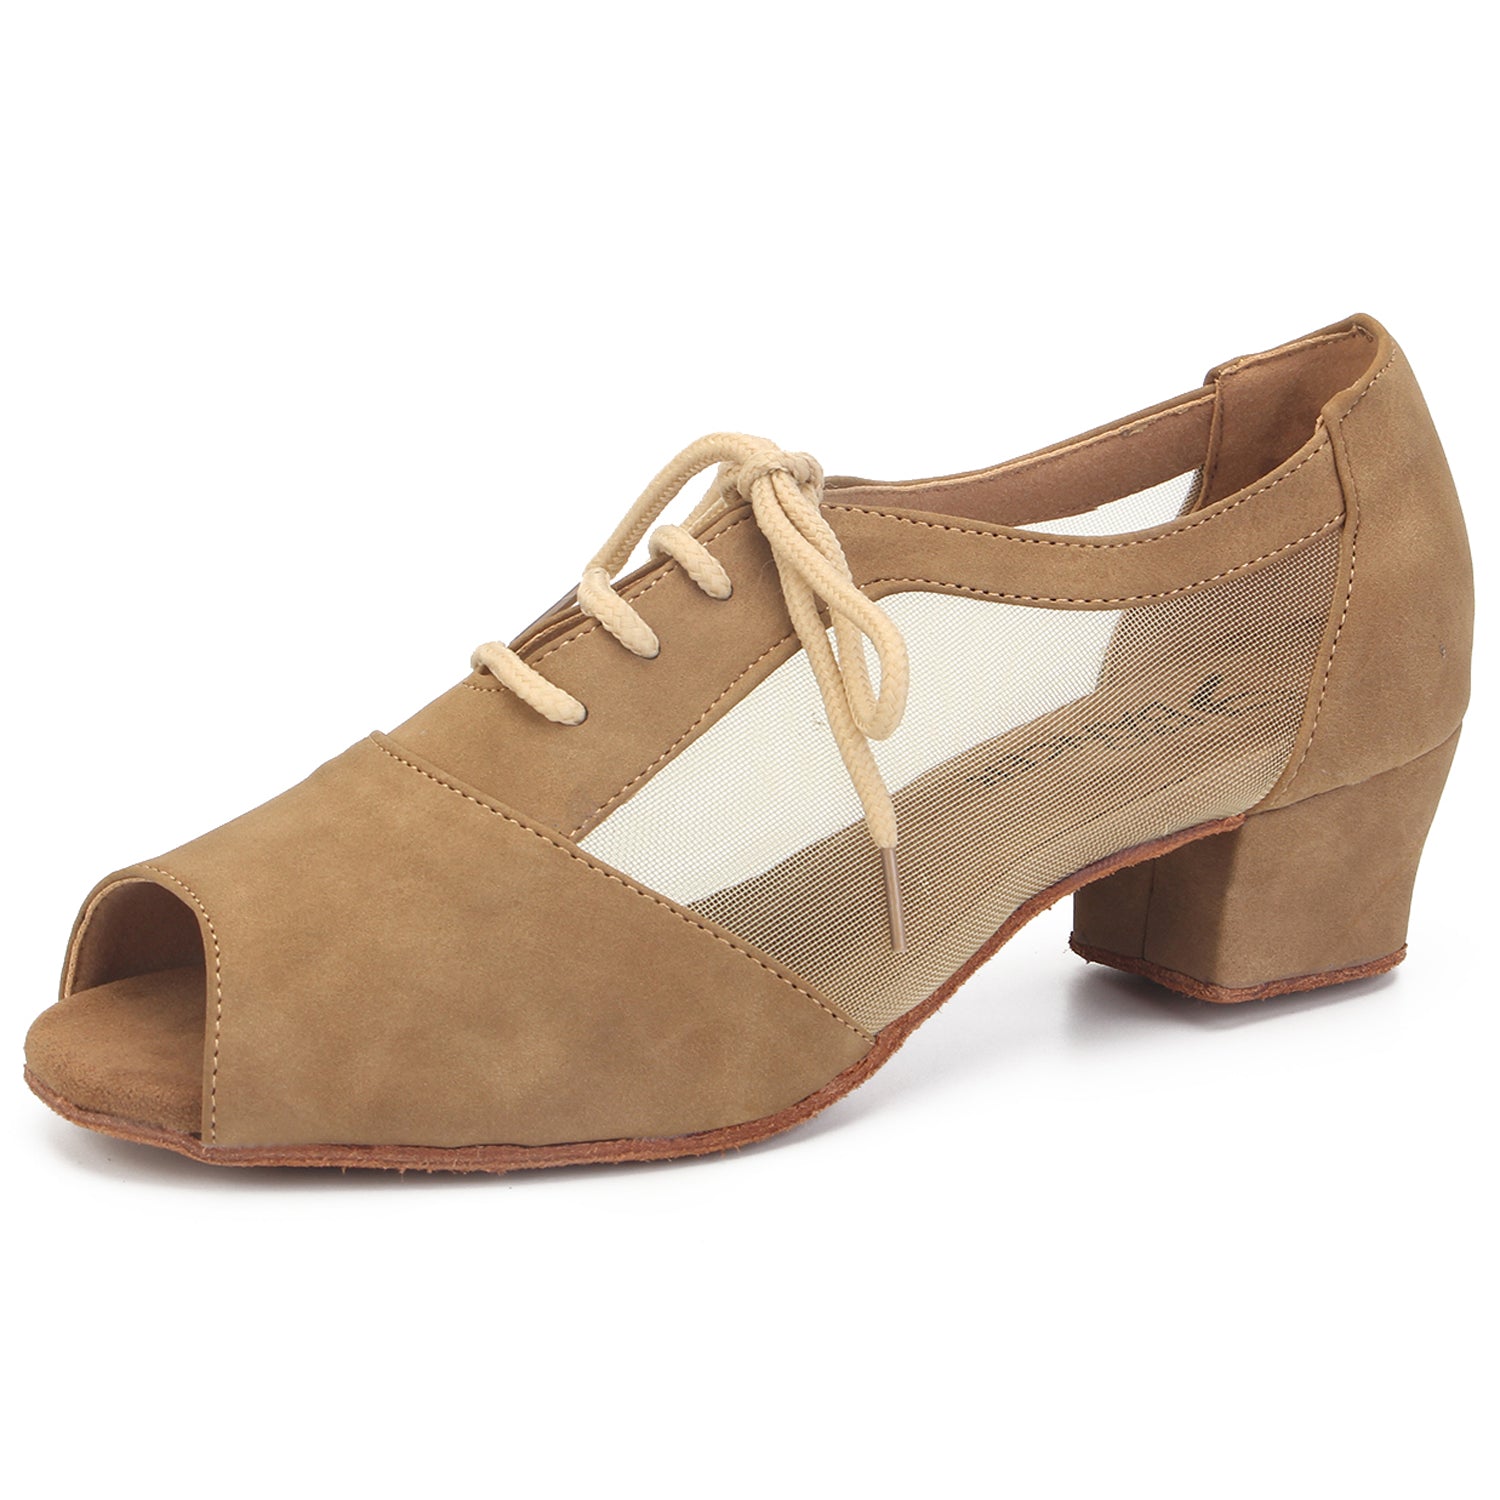 Elegant women's brown suede peep-toe ballroom tango dance shoes2